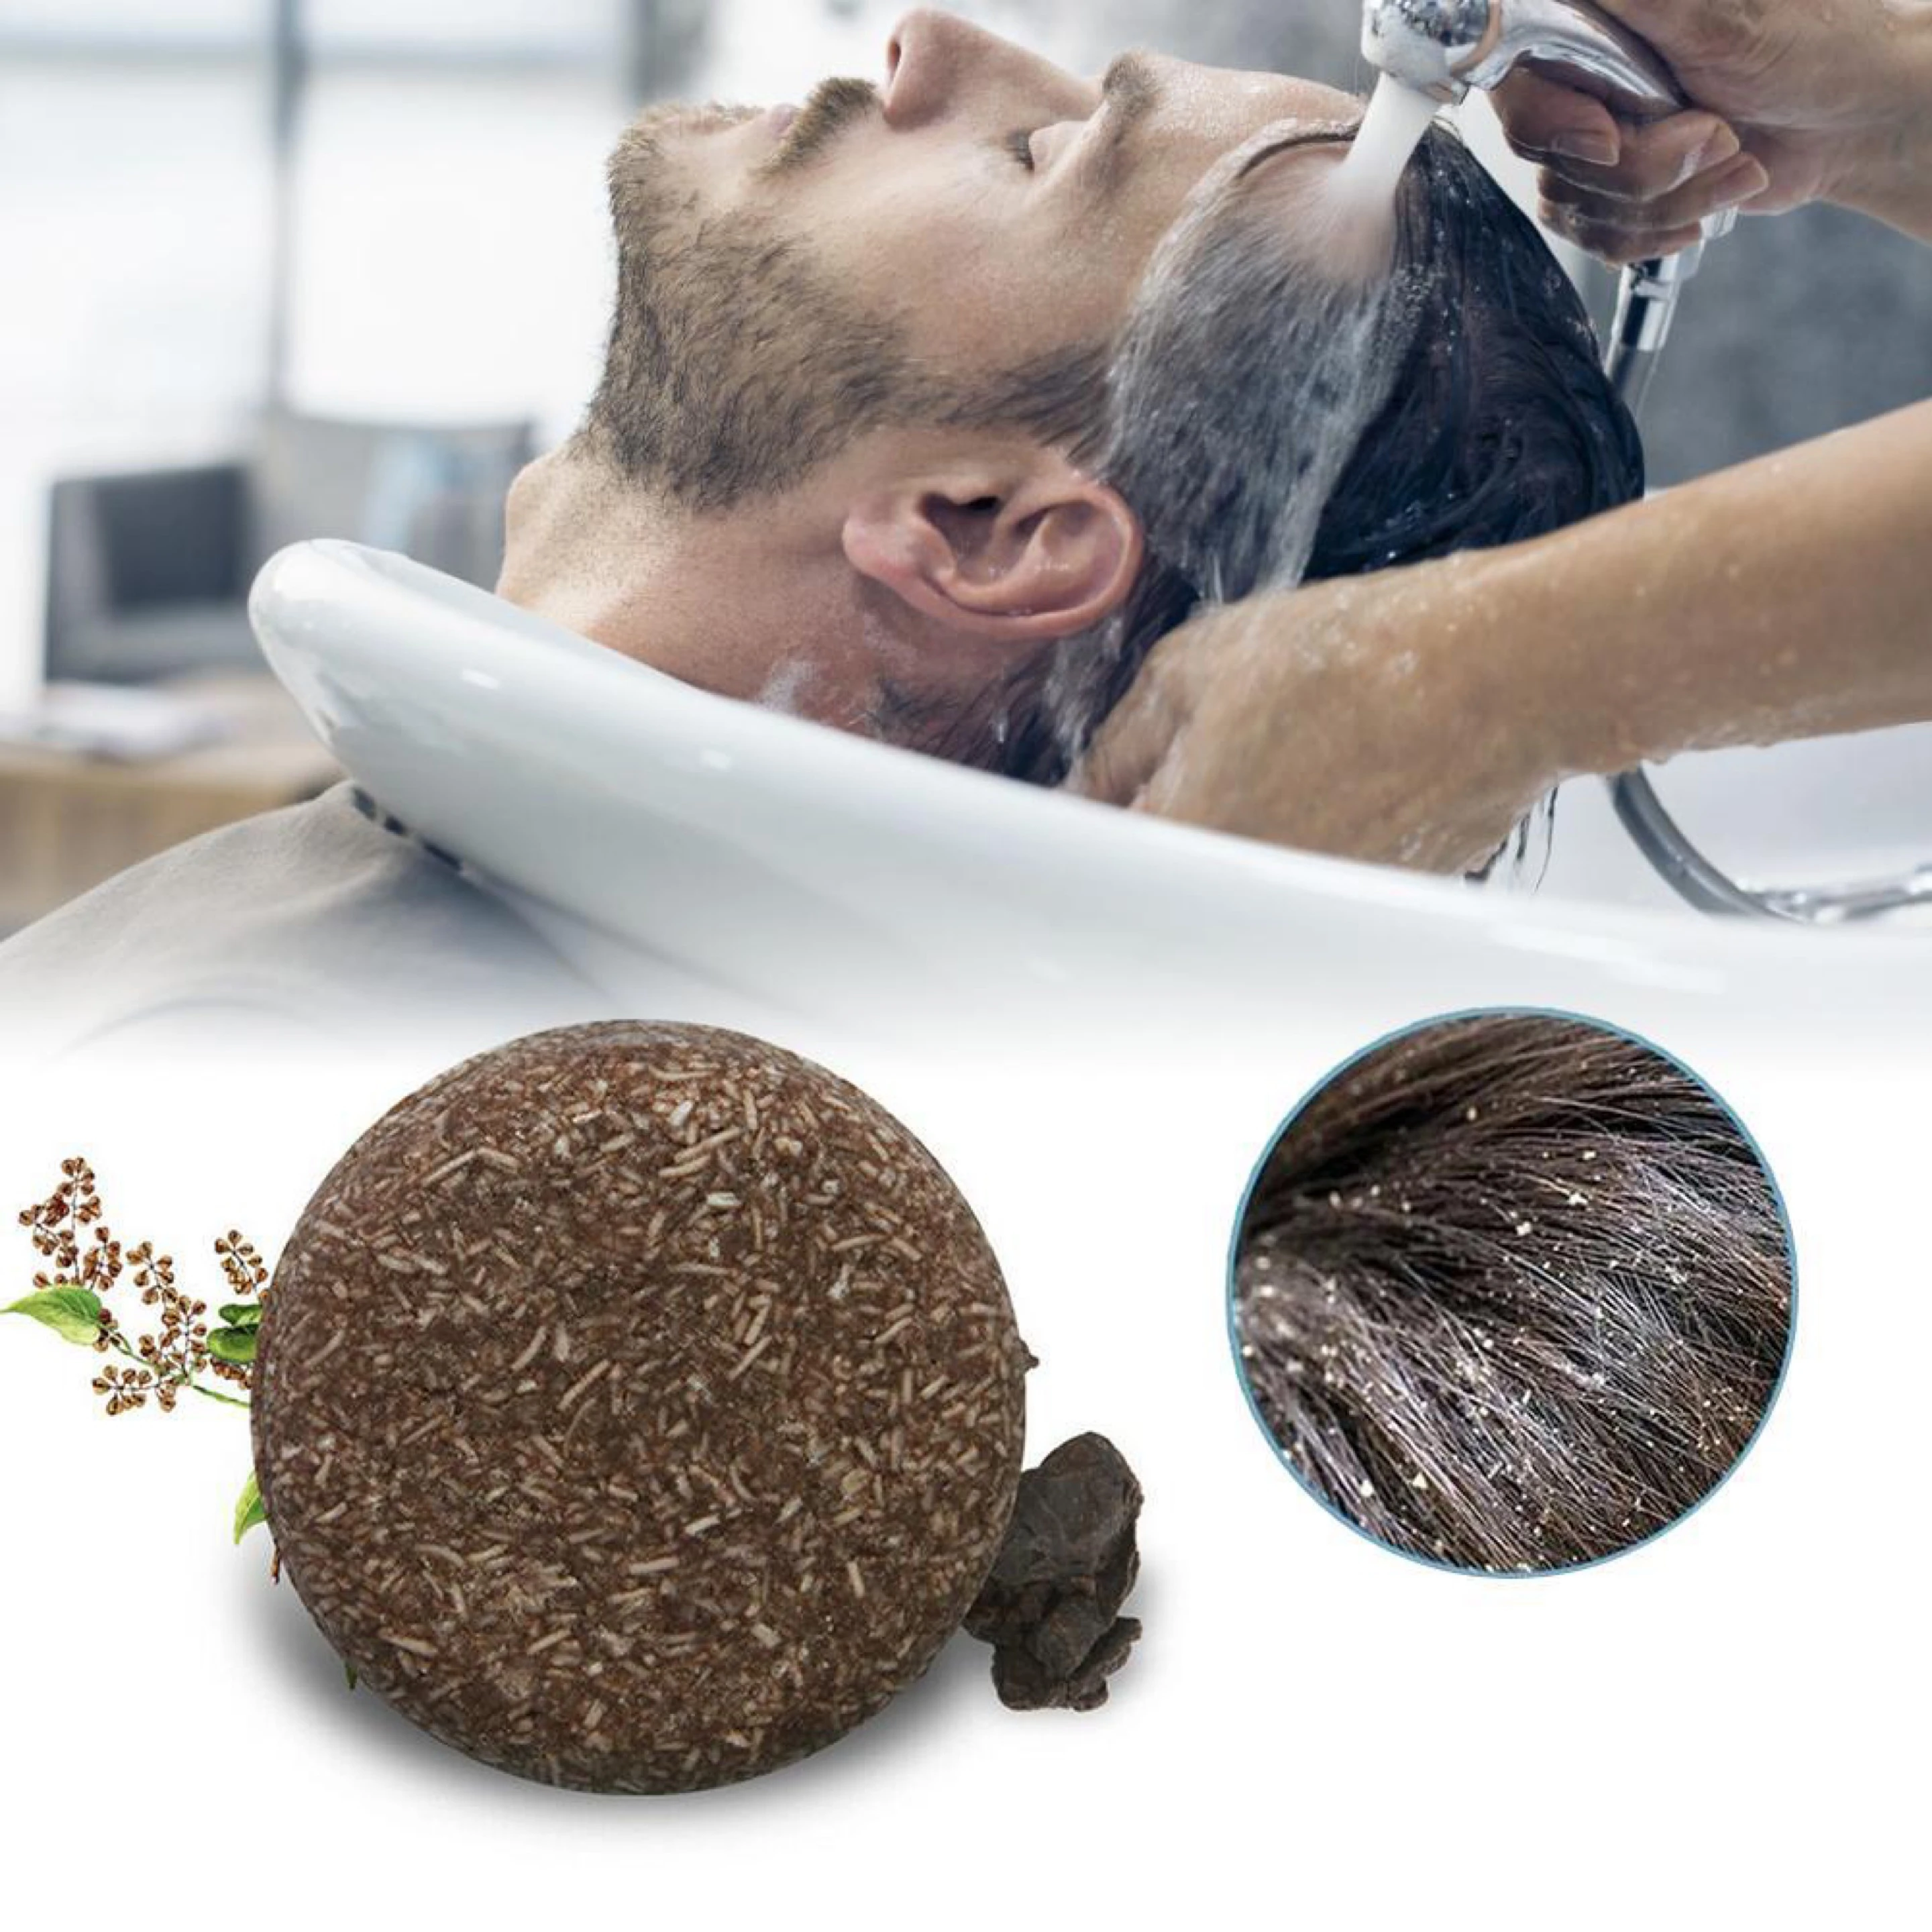 Shouwu Black Hair Darkening Shampoo Bar Handmade Natural Organic Essential Oil Soap Tablet Anti-hair Loss Anti-Itching Products